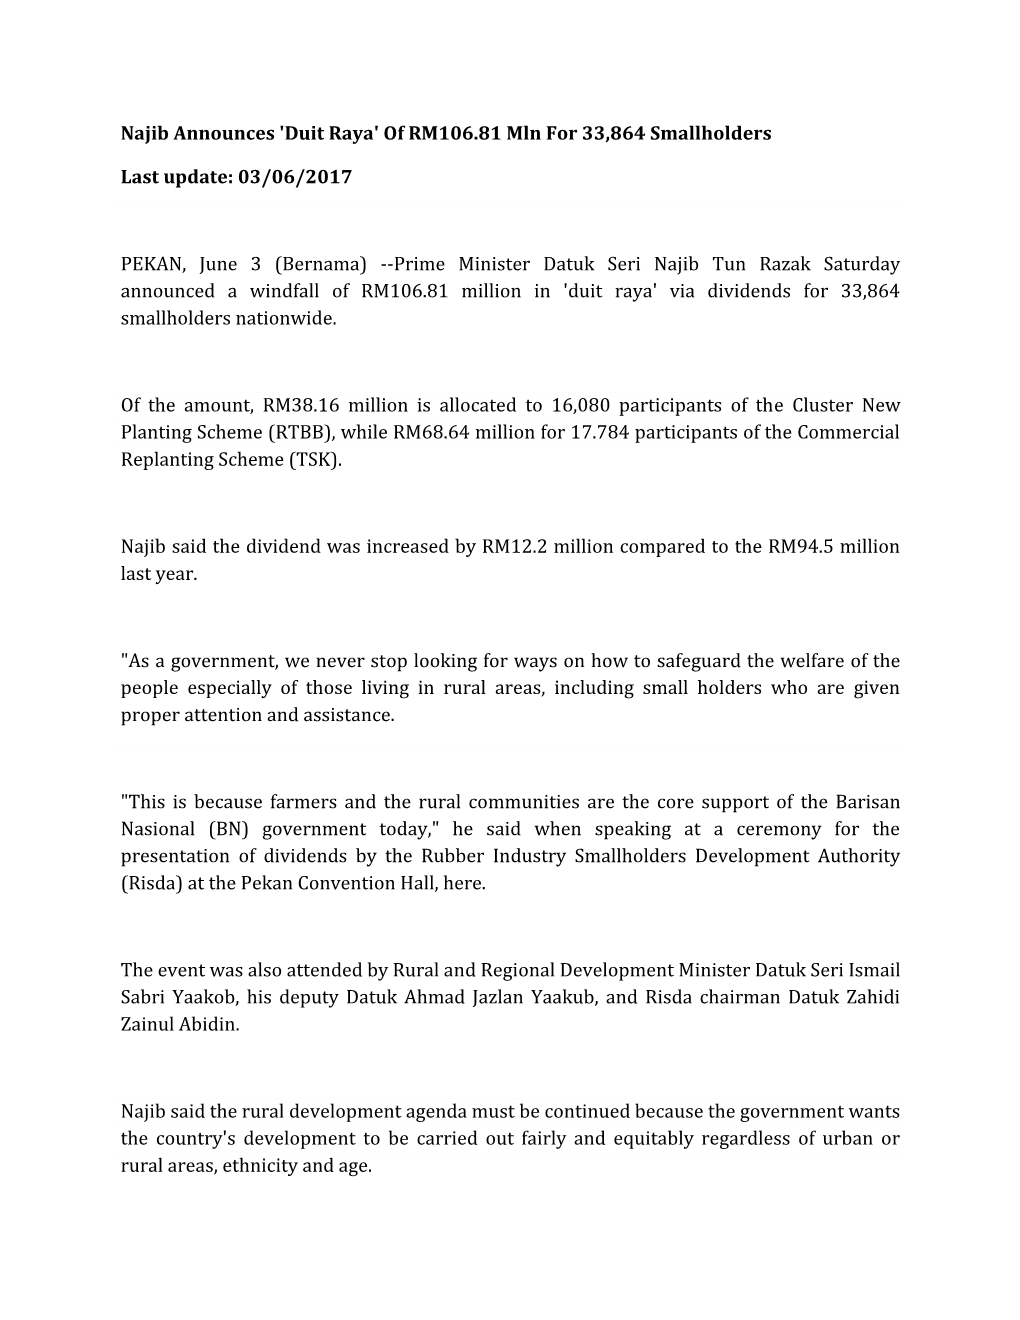 Najib Announces 'Duit Raya' of RM106.81 Mln for 33,864 Smallholders